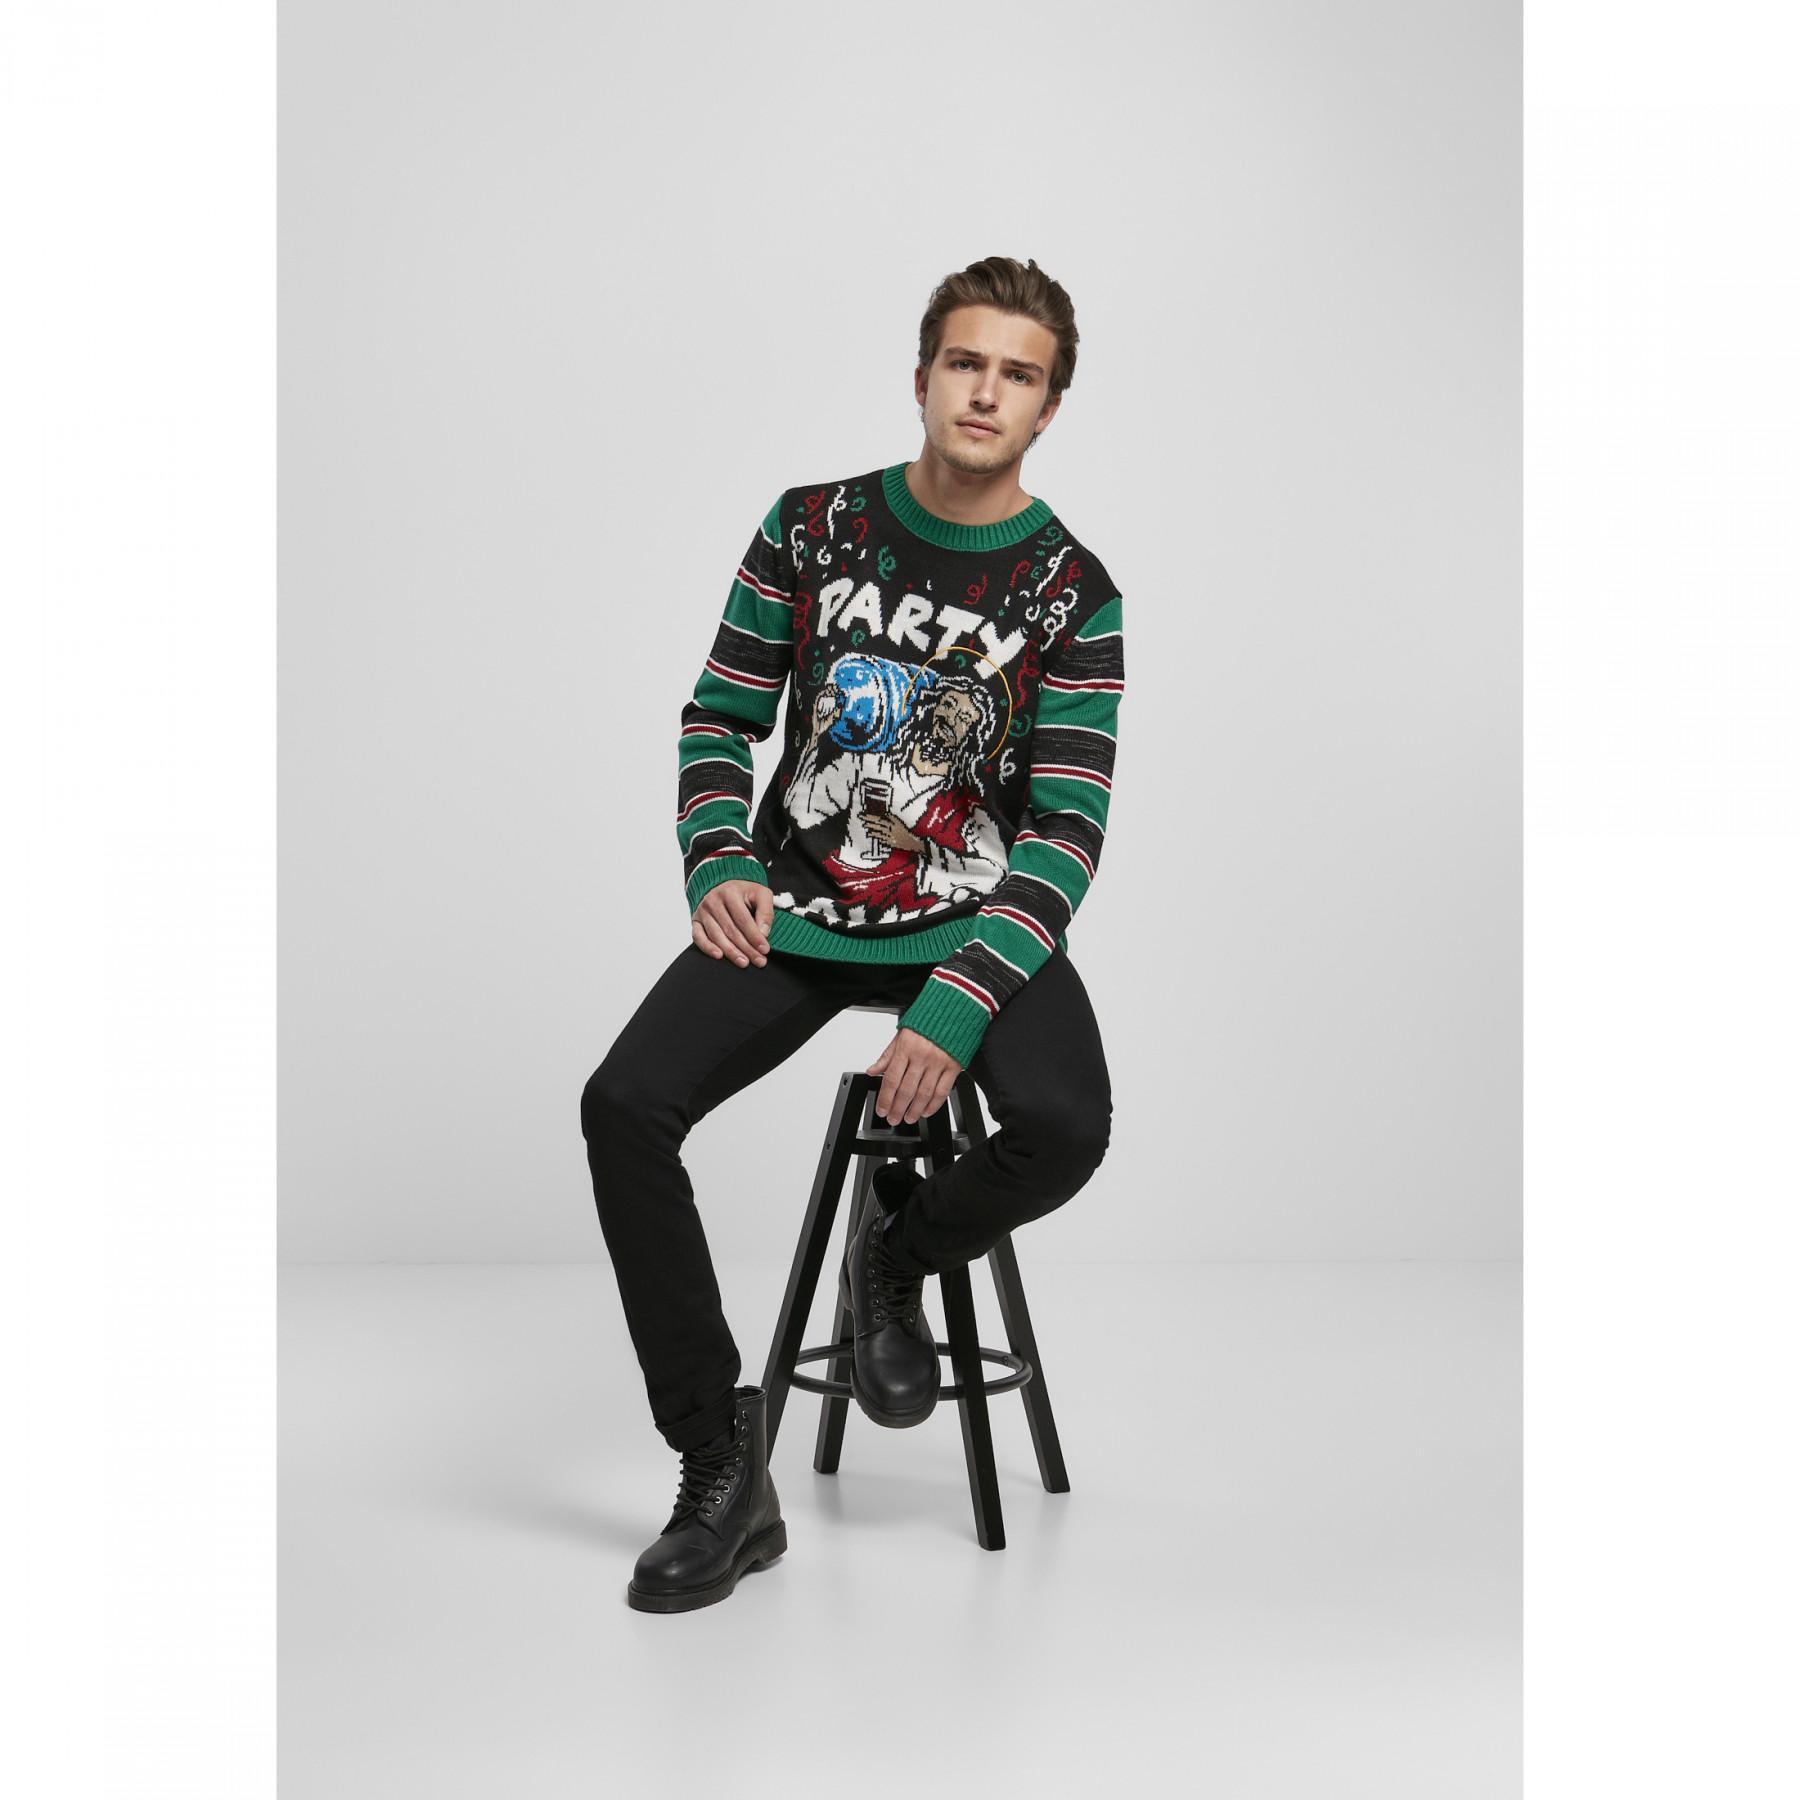 Sweatshirt Urban Classics savior christmas